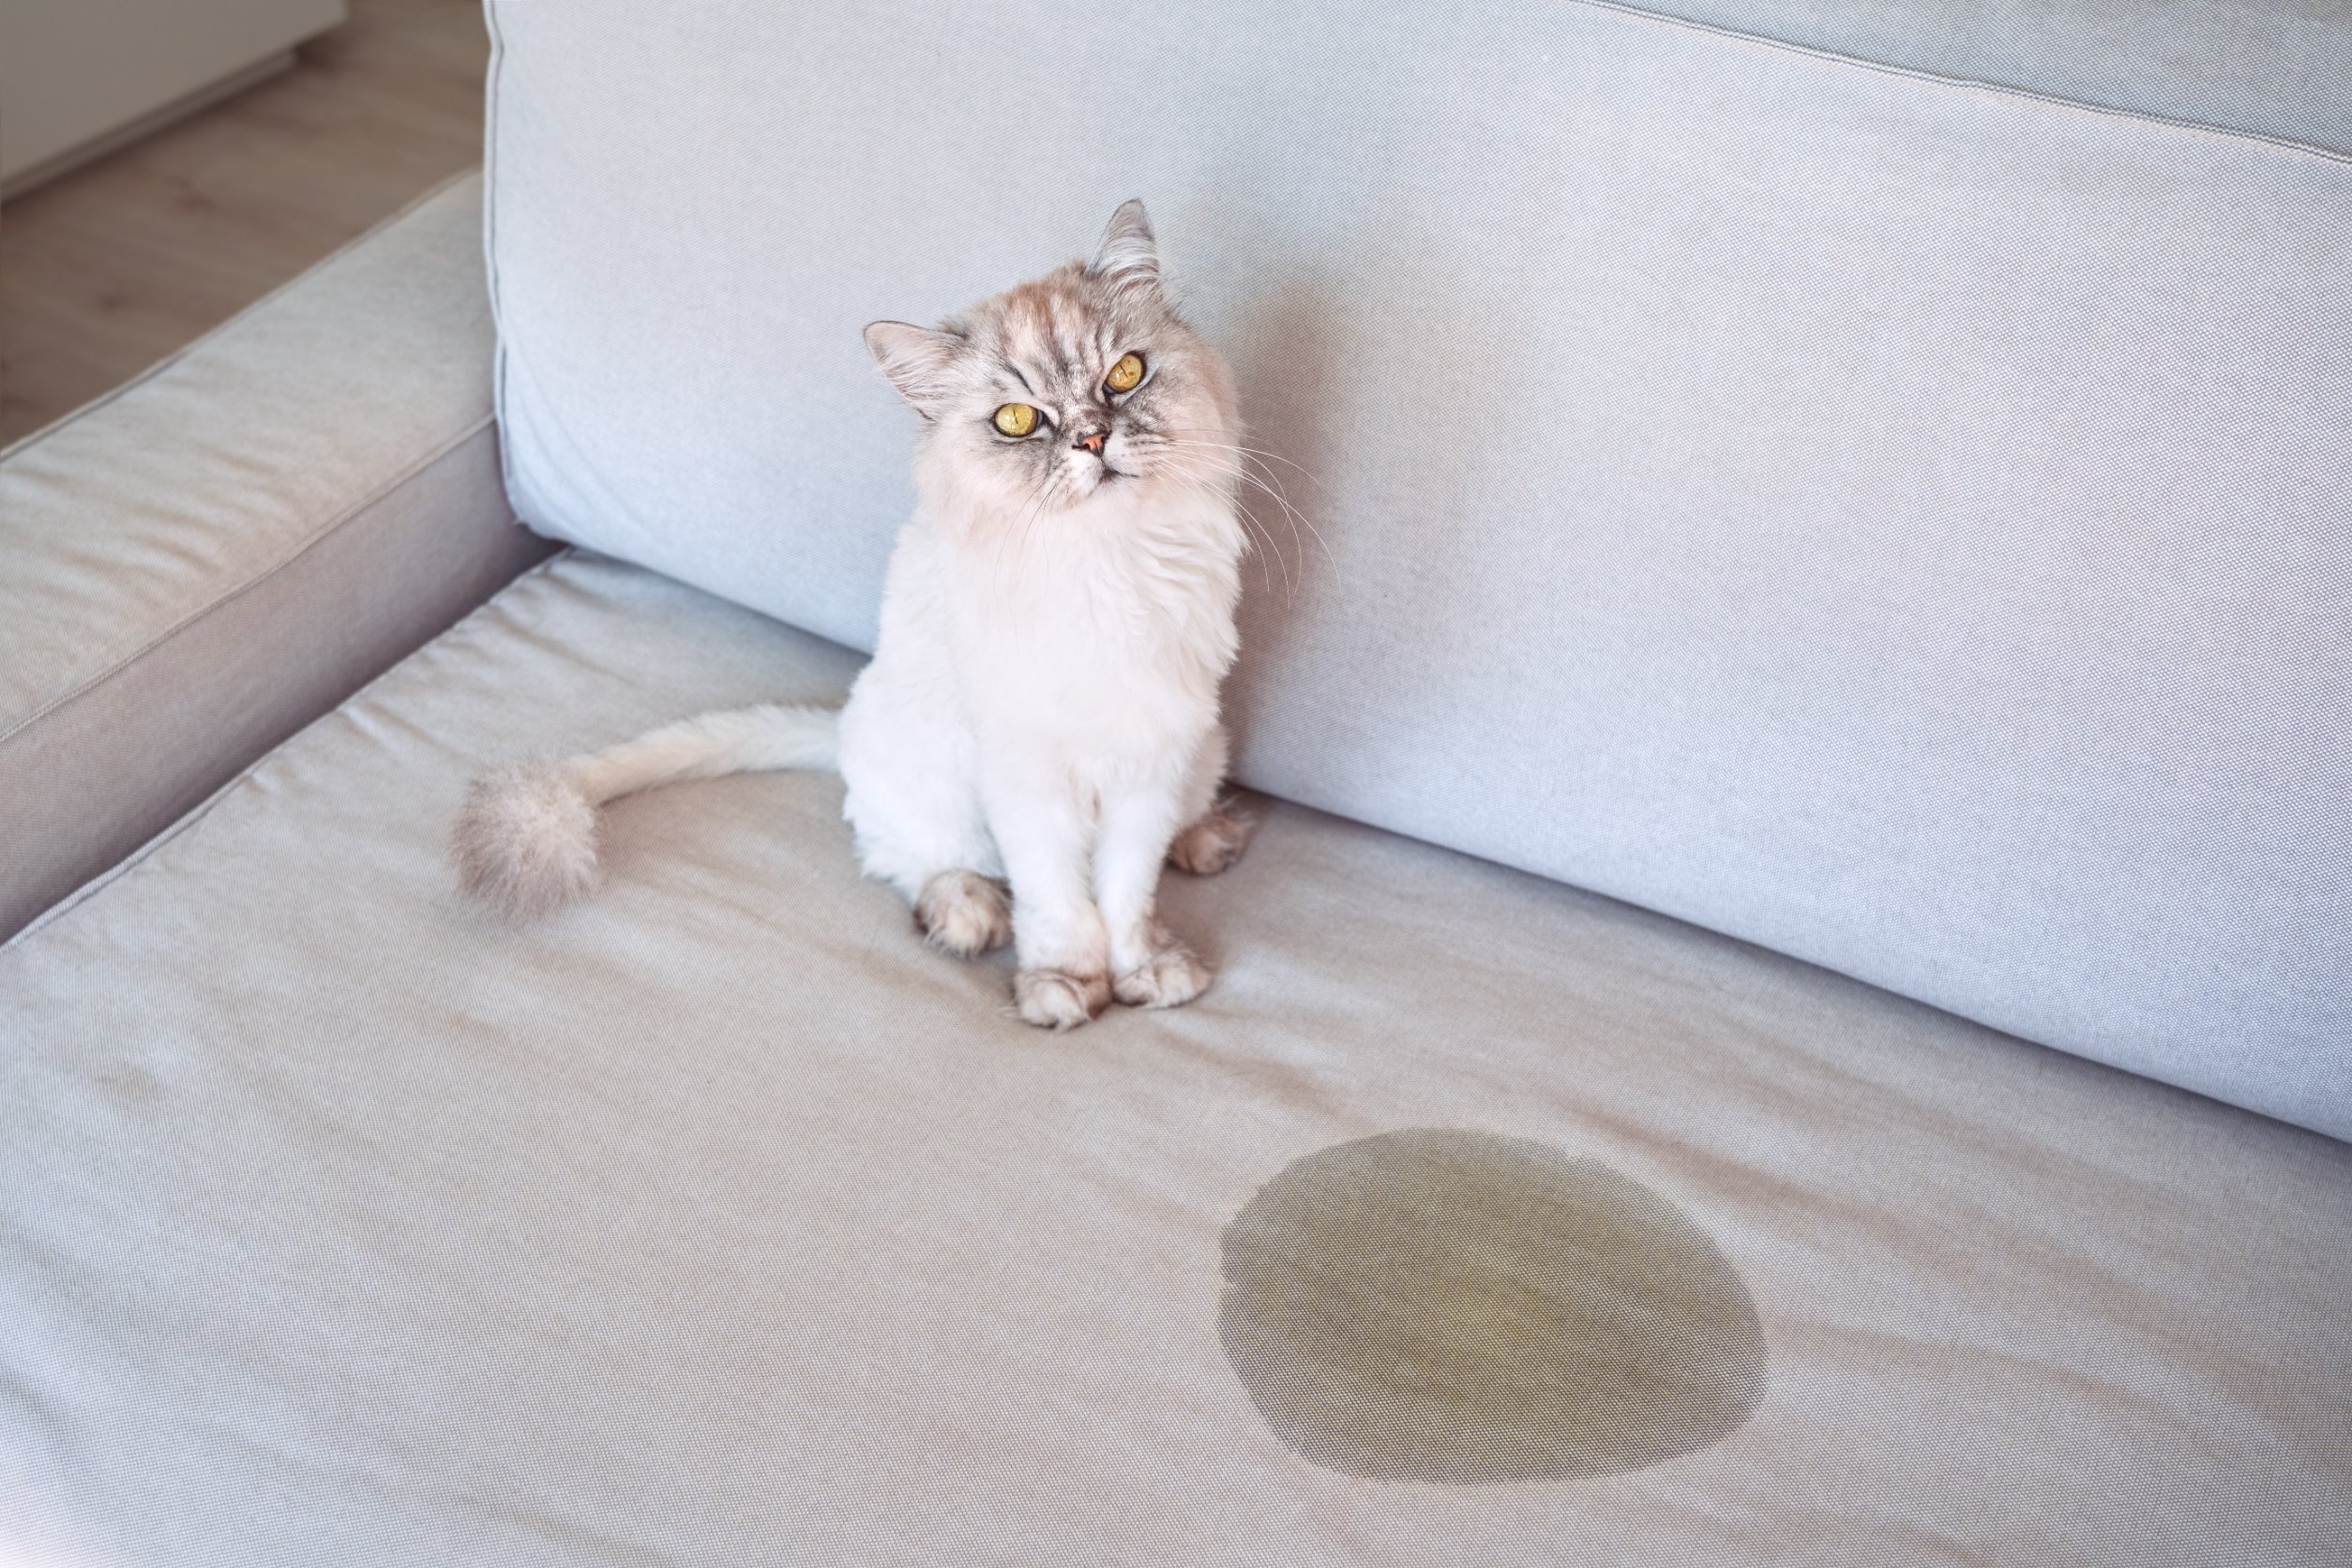 cat sitting next to pee on carpet